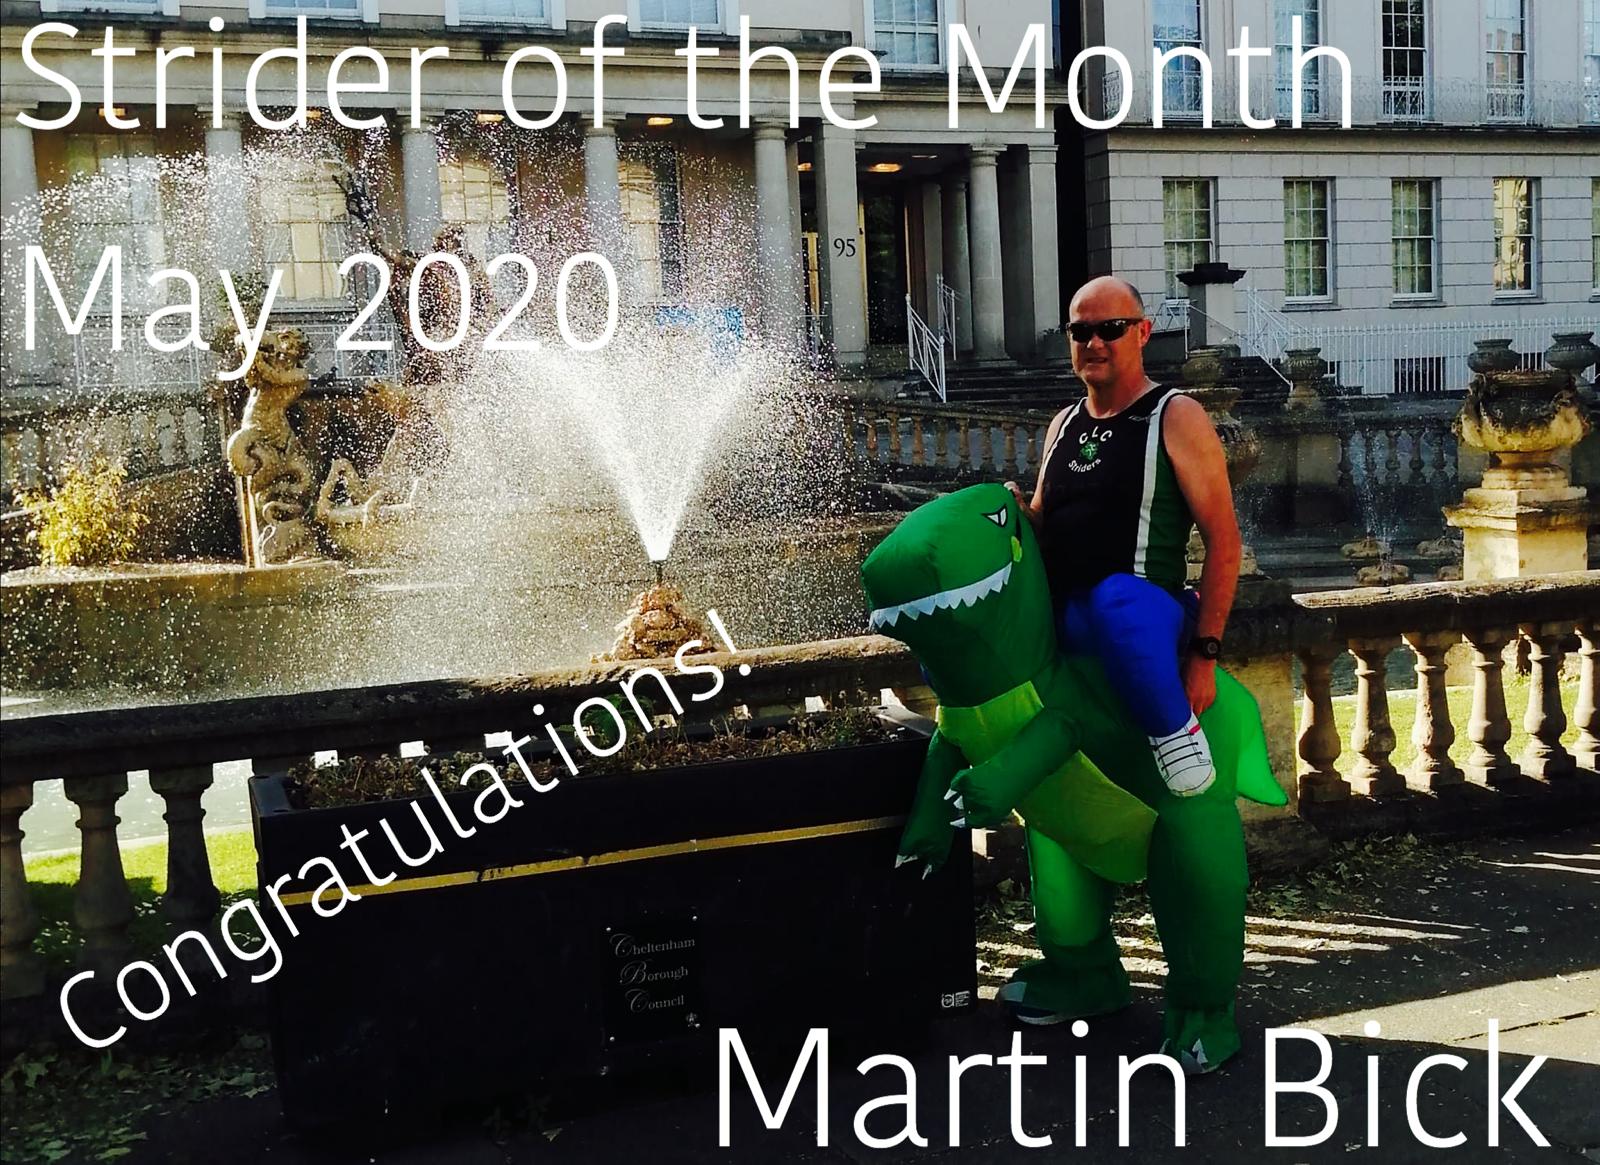 Strider of the month Martin Bick